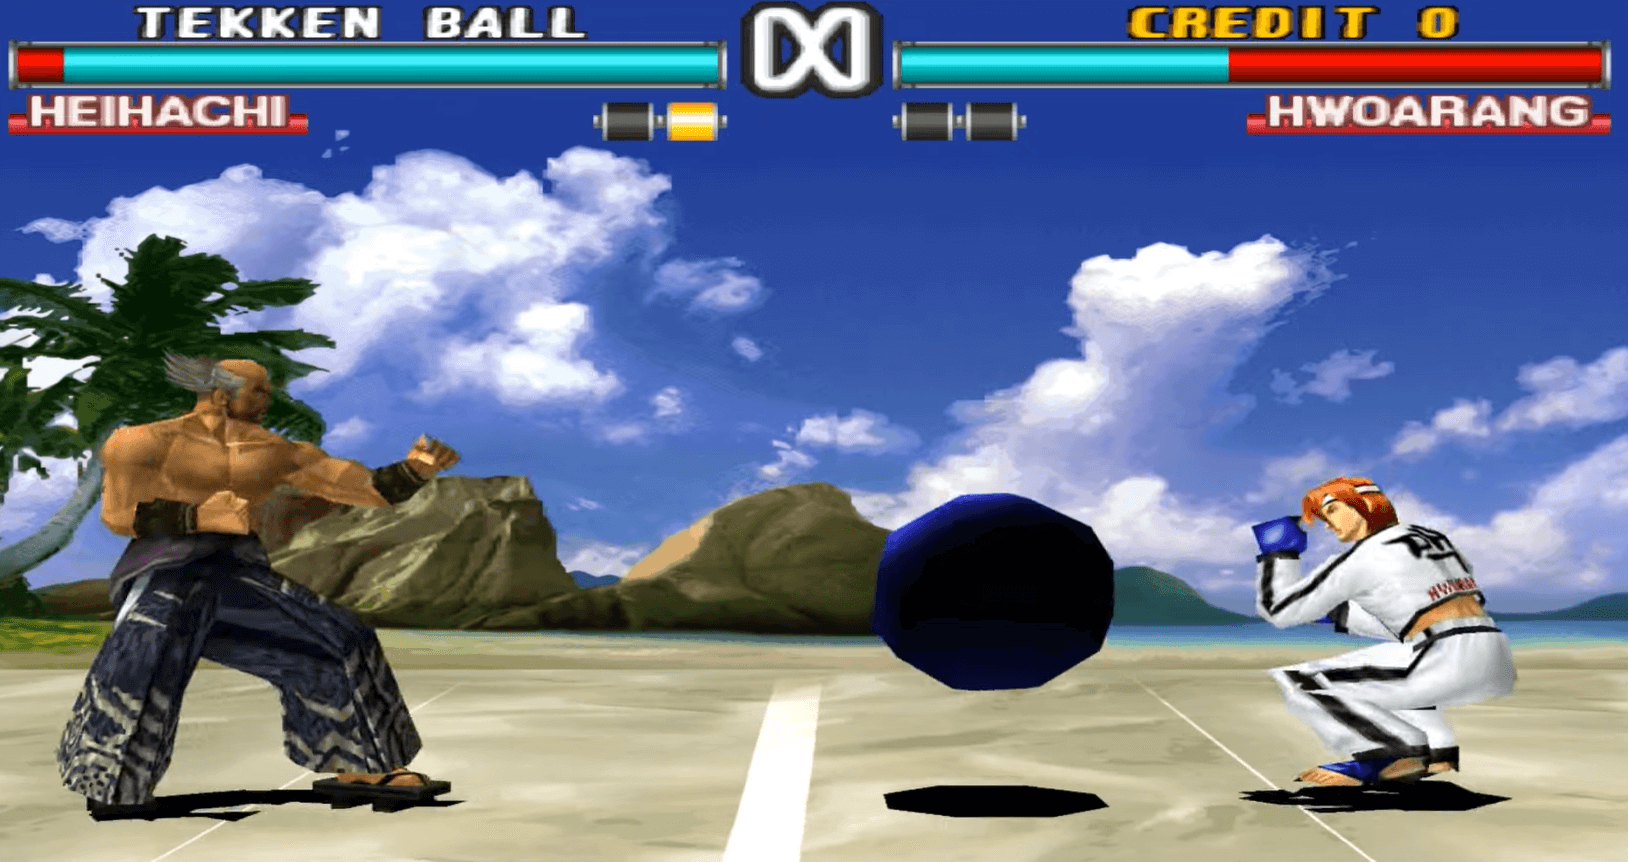 Tekken Ball Returns Triumphantly in Tekken 8 with Online Play